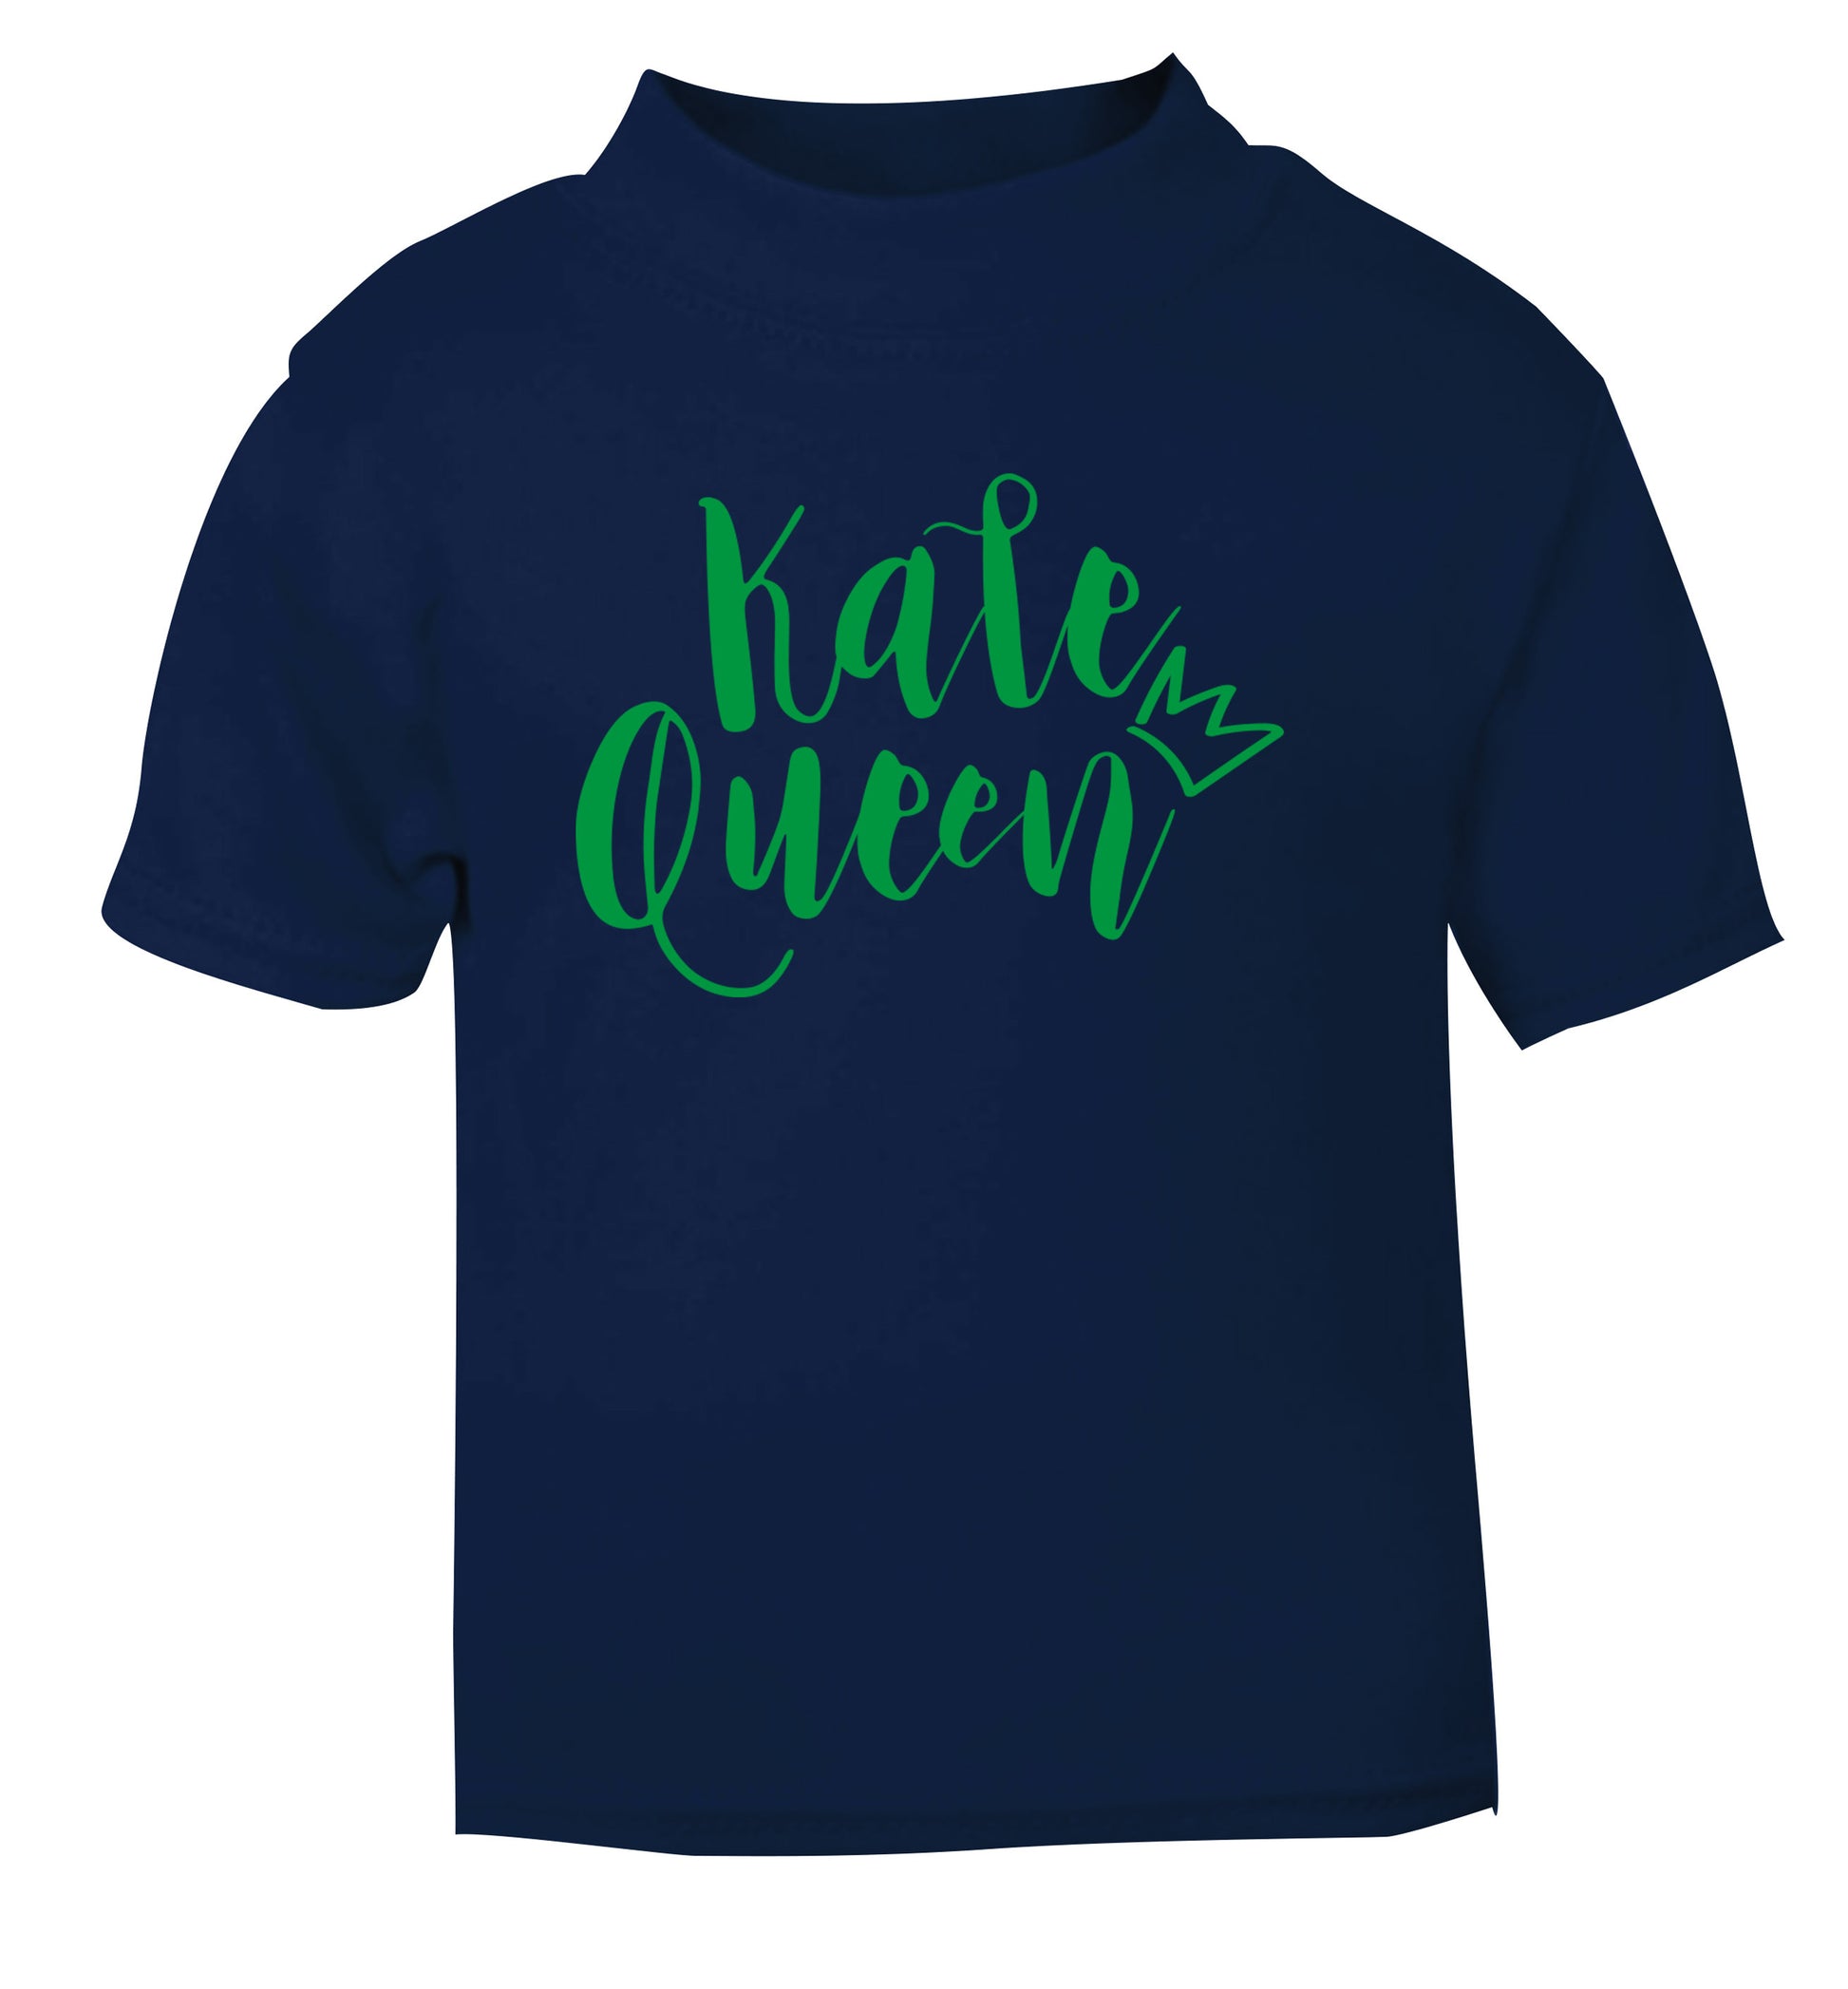 Kale Queen navy Baby Toddler Tshirt 2 Years